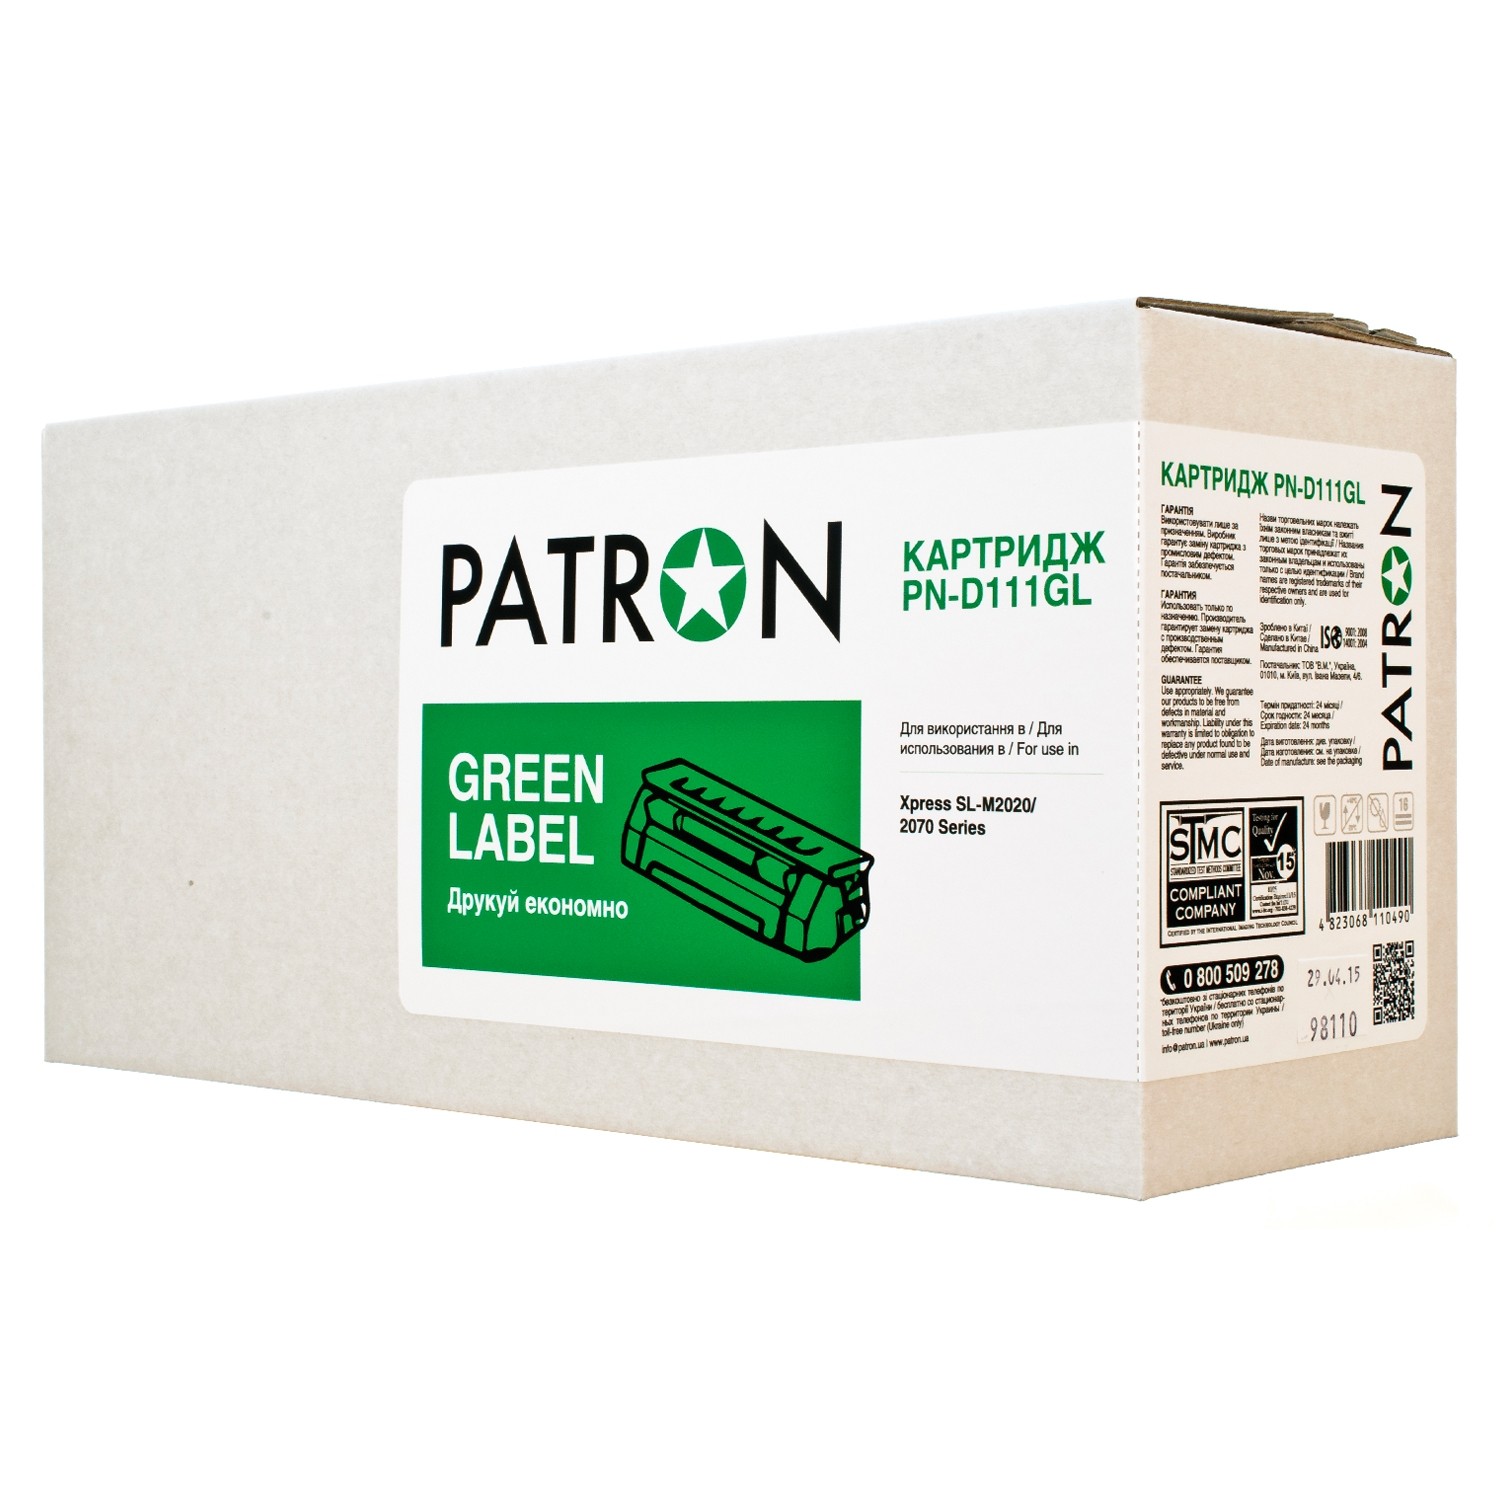 КАРТРИДЖ SAMSUNG MLT-D111S (PN-D111GL) (SL-M2020) PATRON GREEN Label